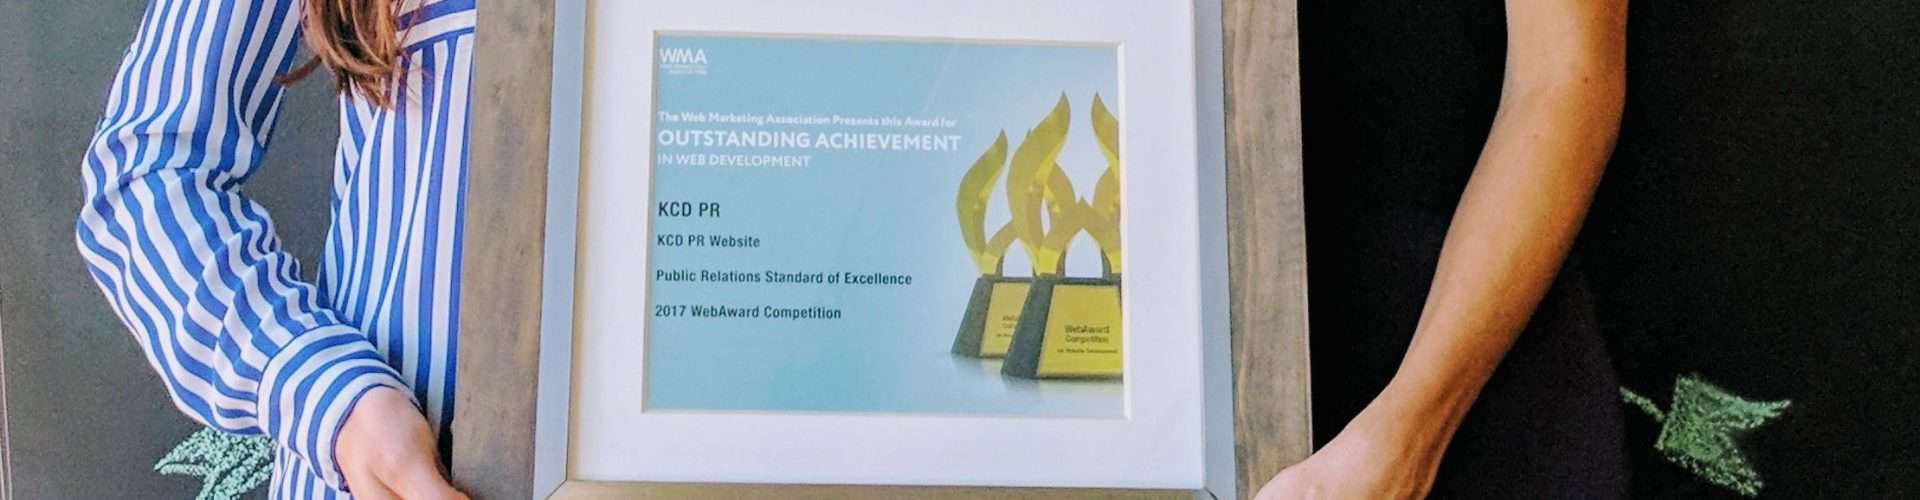 KCD PR WebAward, award winning public relations marketing agency firm